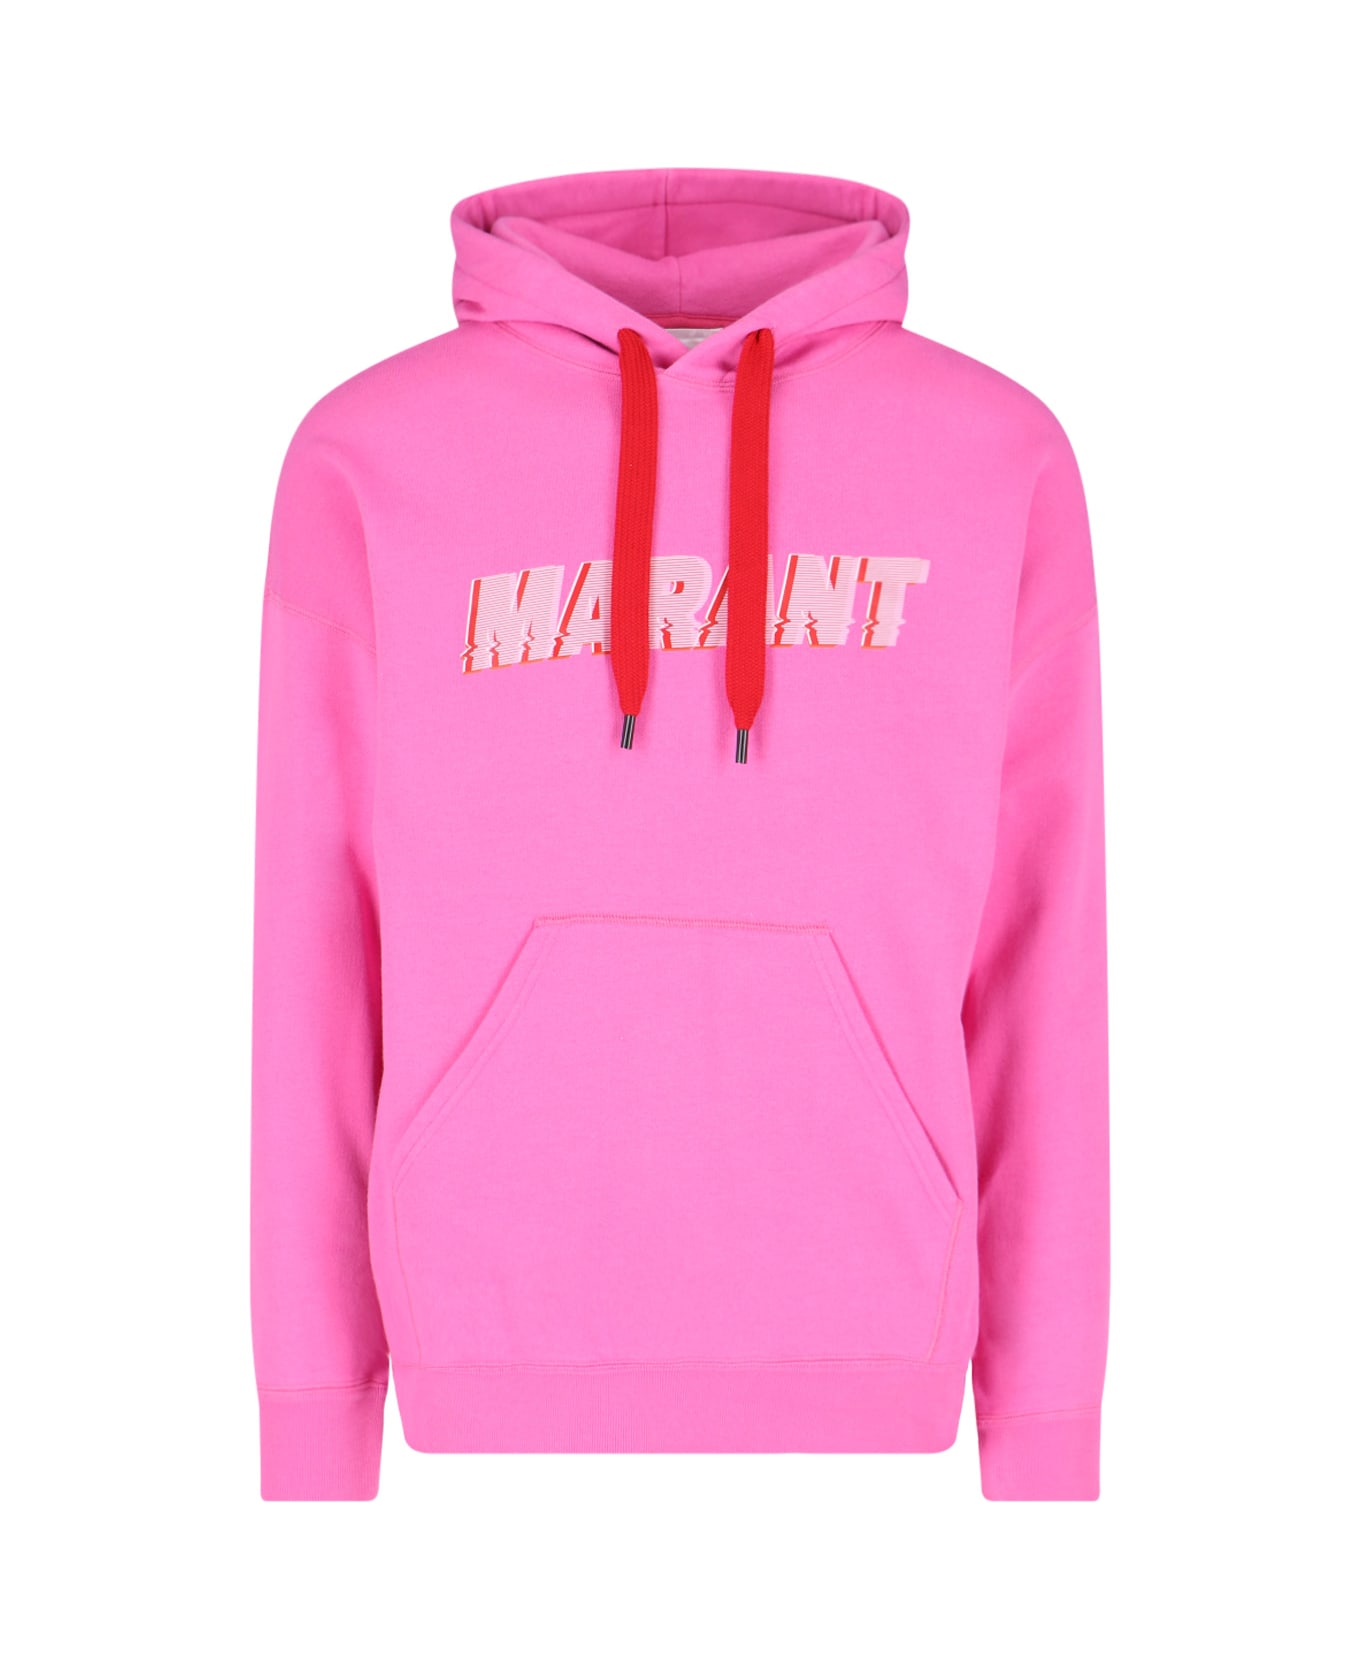 Isabel Marant Rose Cotton Blend Miley Sweatshirt - Pink